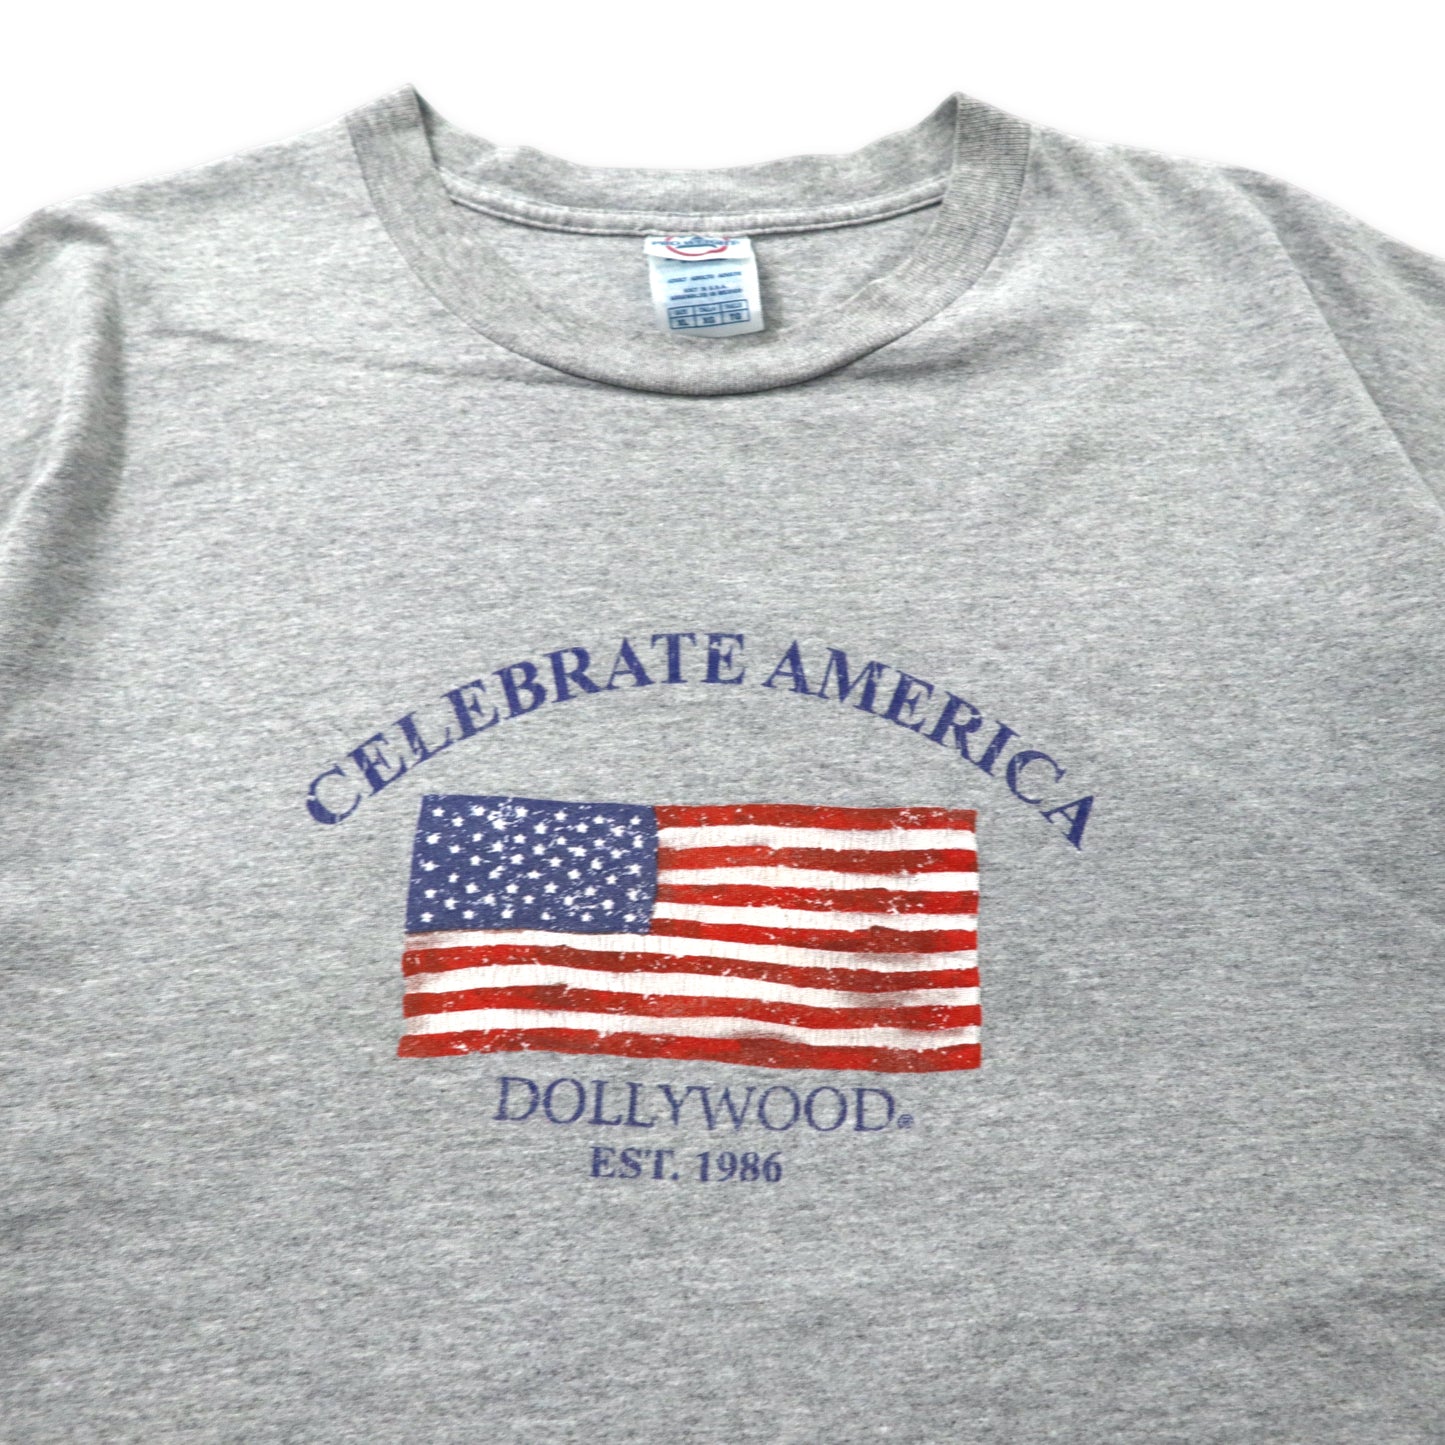 USA製 DELTA プリントTシャツ XL グレー 星条旗 コットン CELEBRATE AMERICA ビッグサイズ